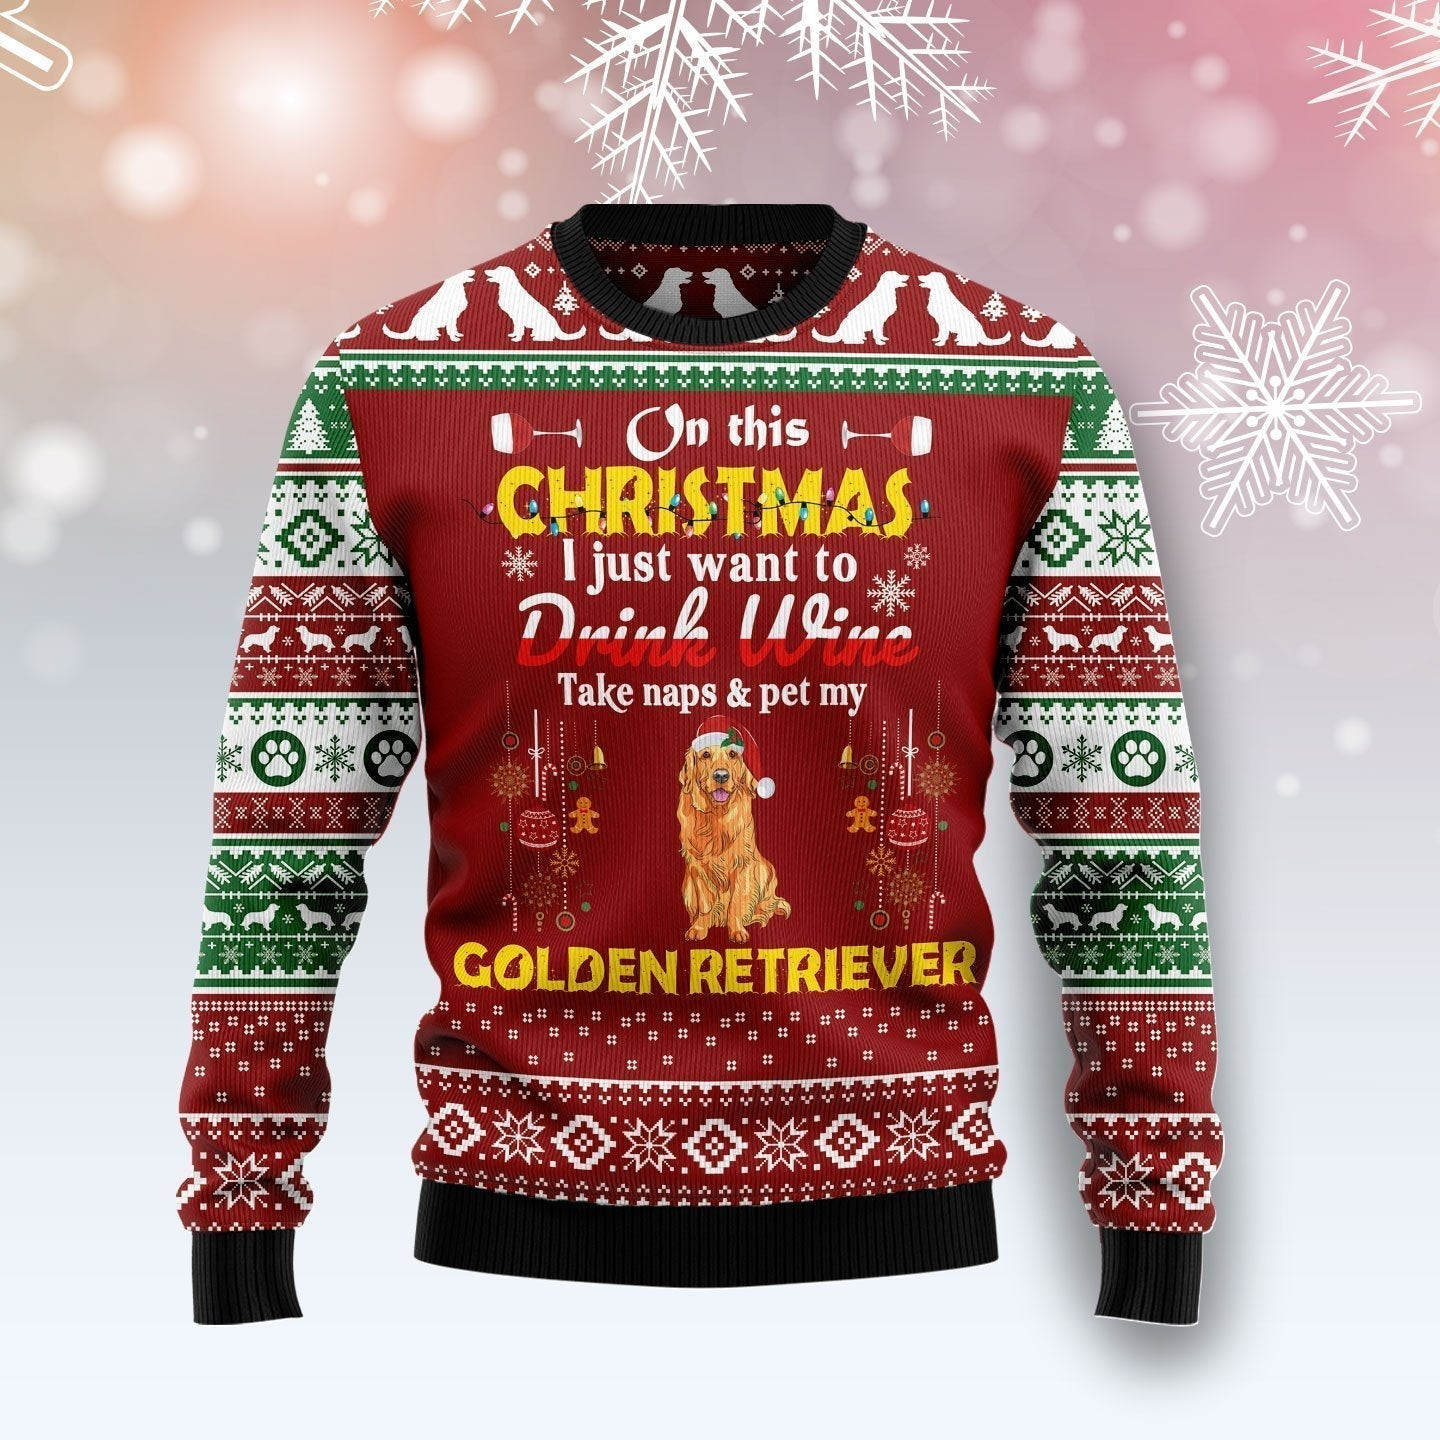 Drink Wine Pet My Golden Retriever Ugly Christmas Sweater